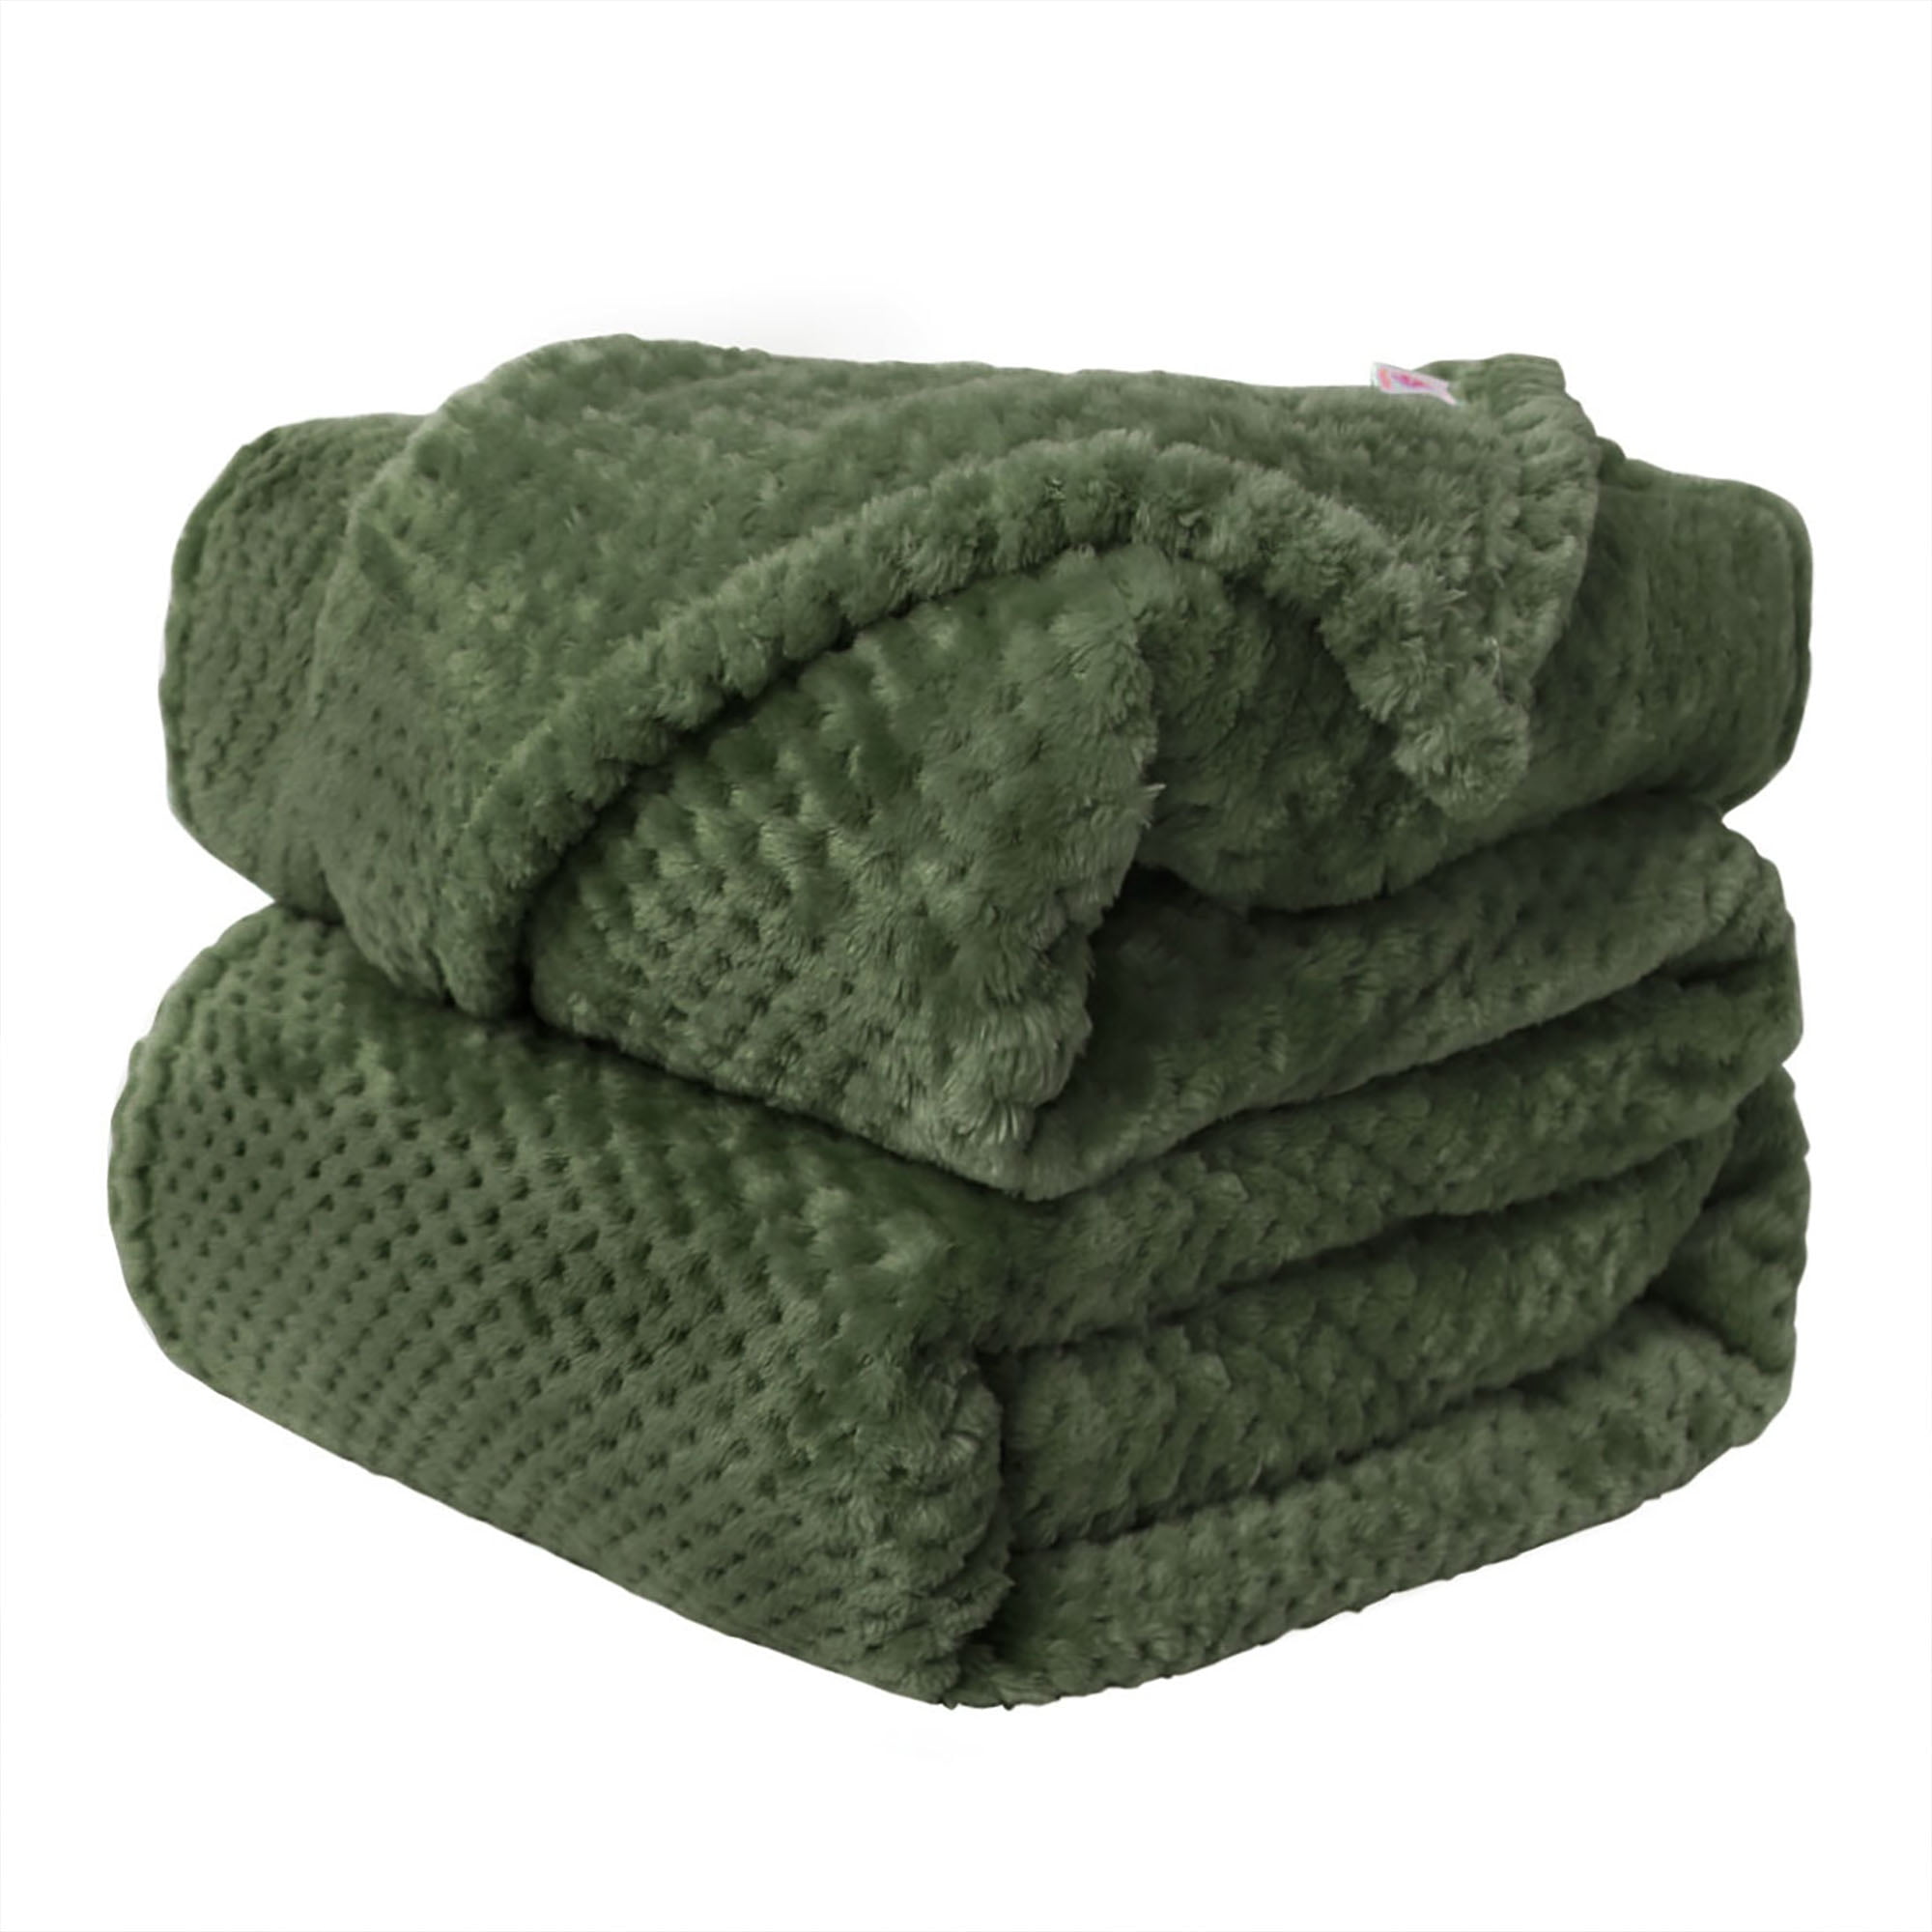 Metallic Star Art Warm Fleece Throw Blanket 150x200 Soft Throw 9 Colors Hot Sale 